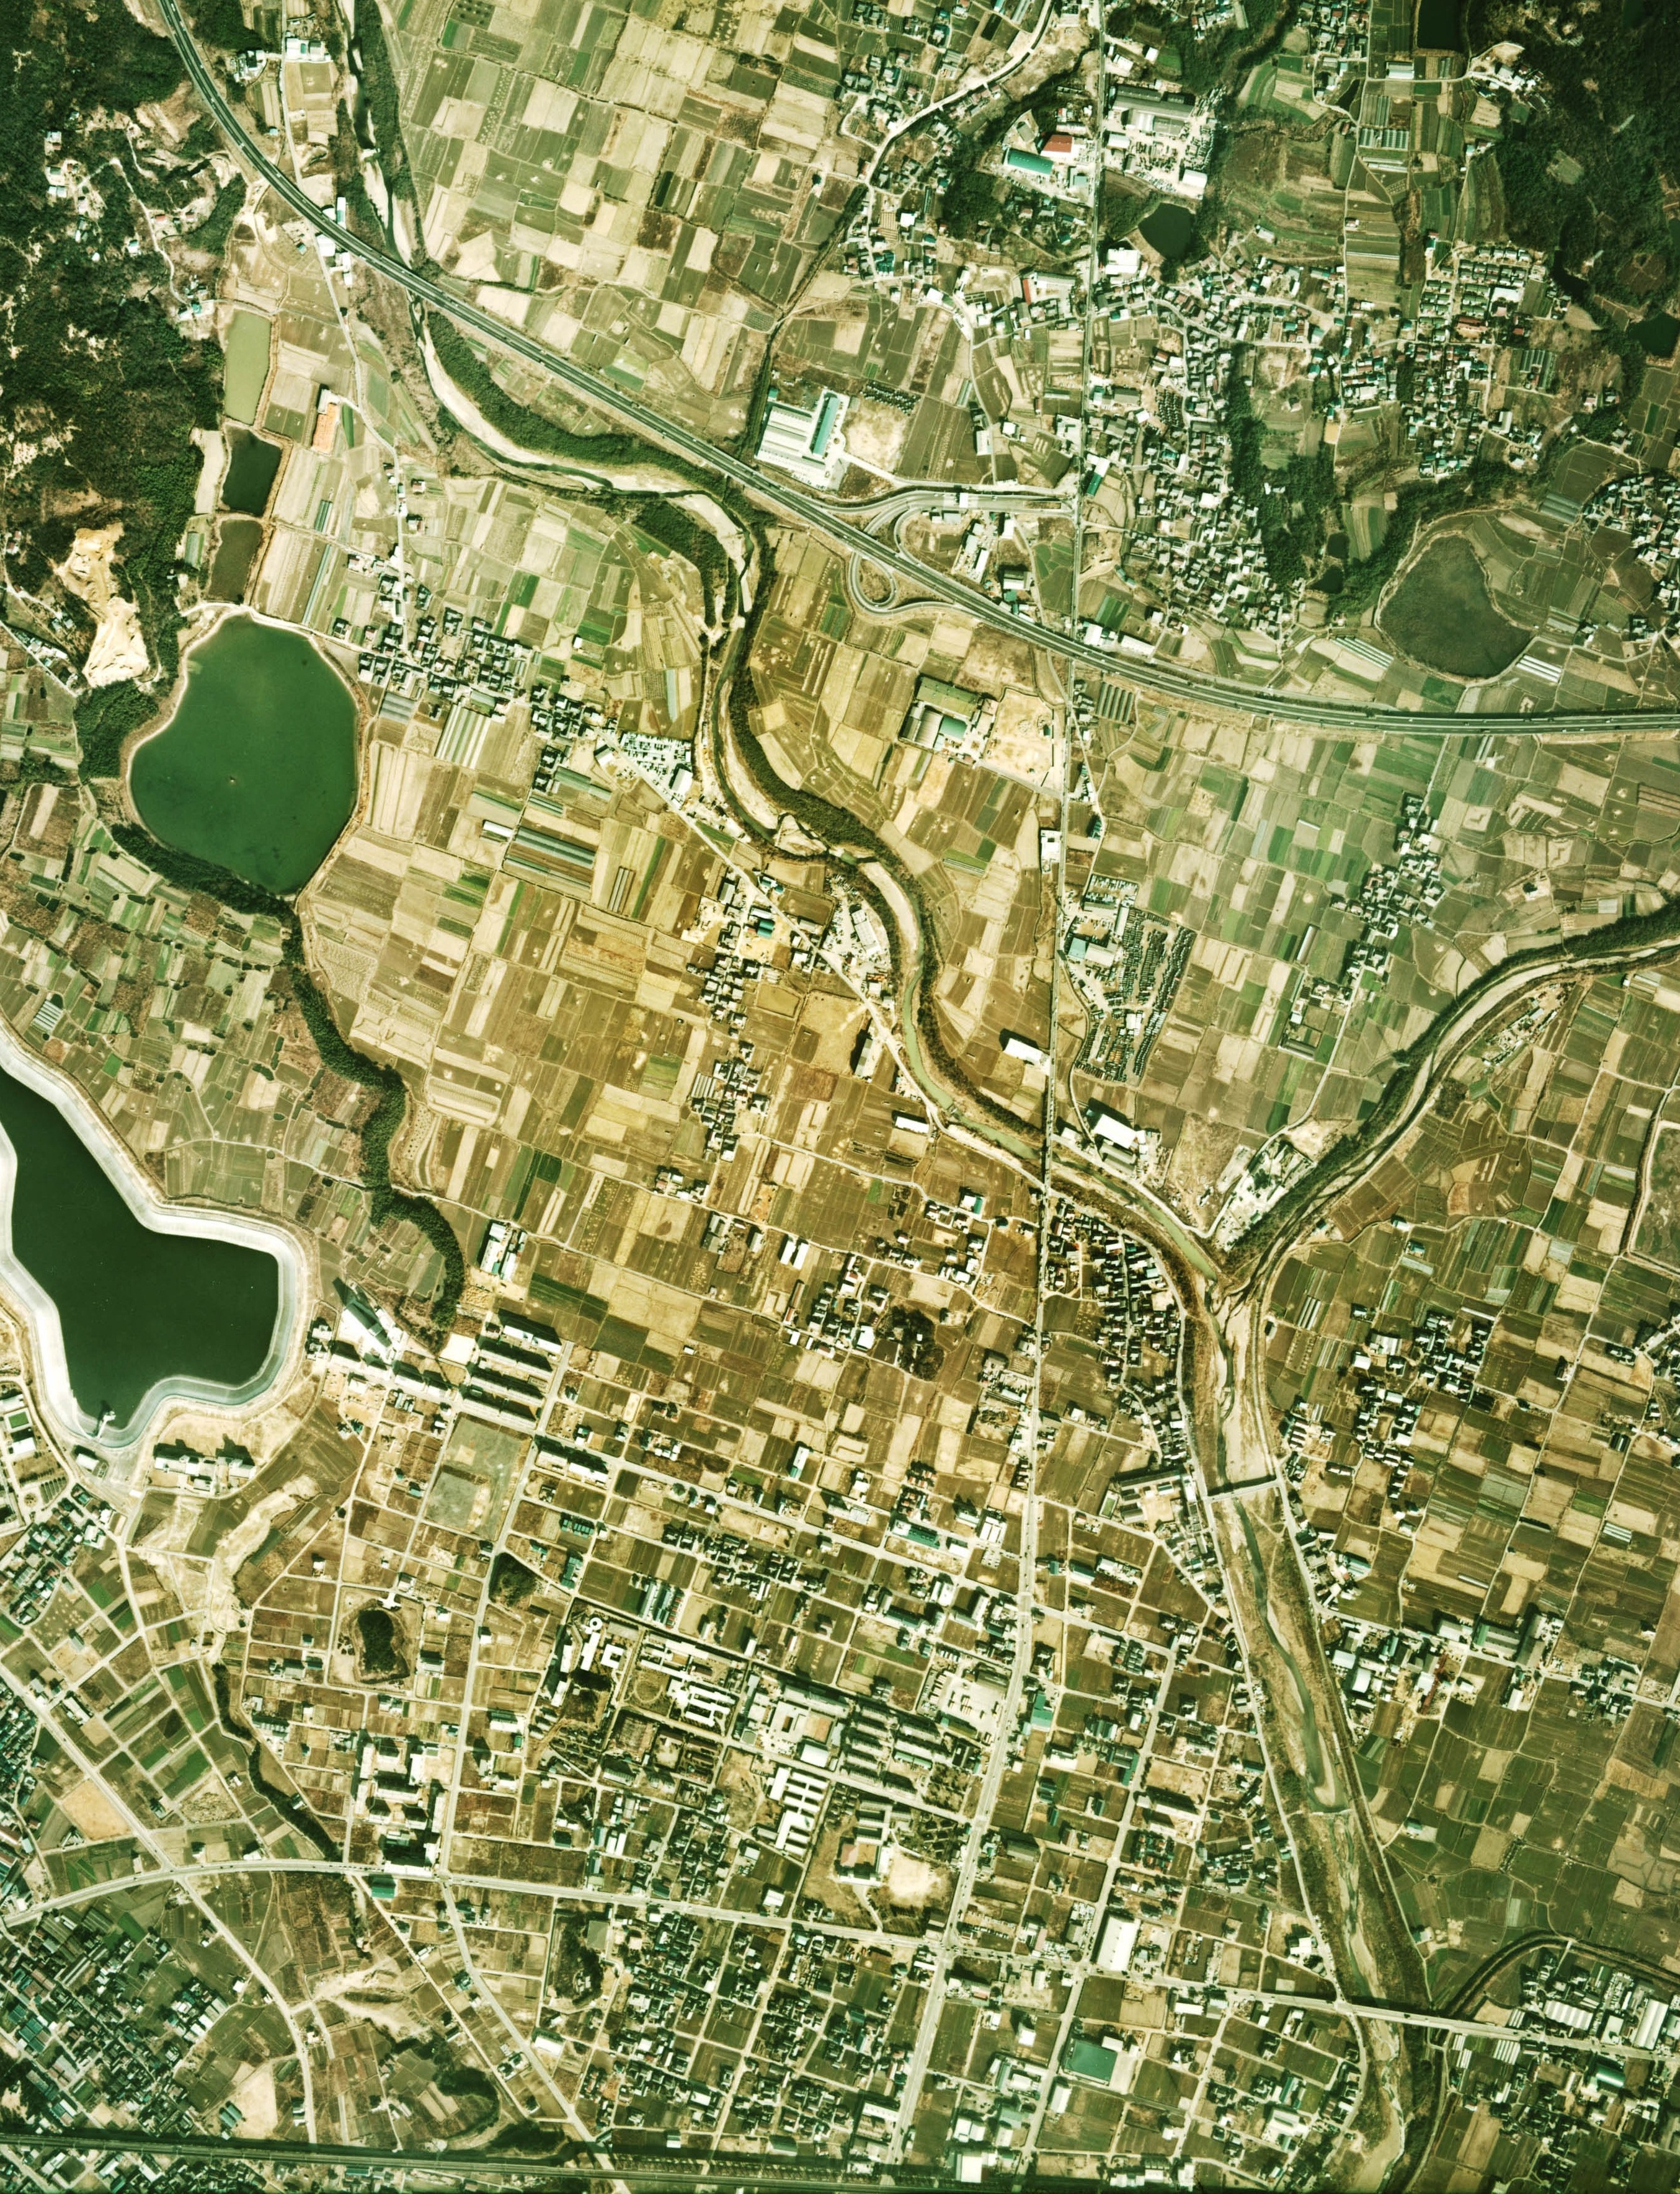 Nishi-ku Kobecity arban area in 1974